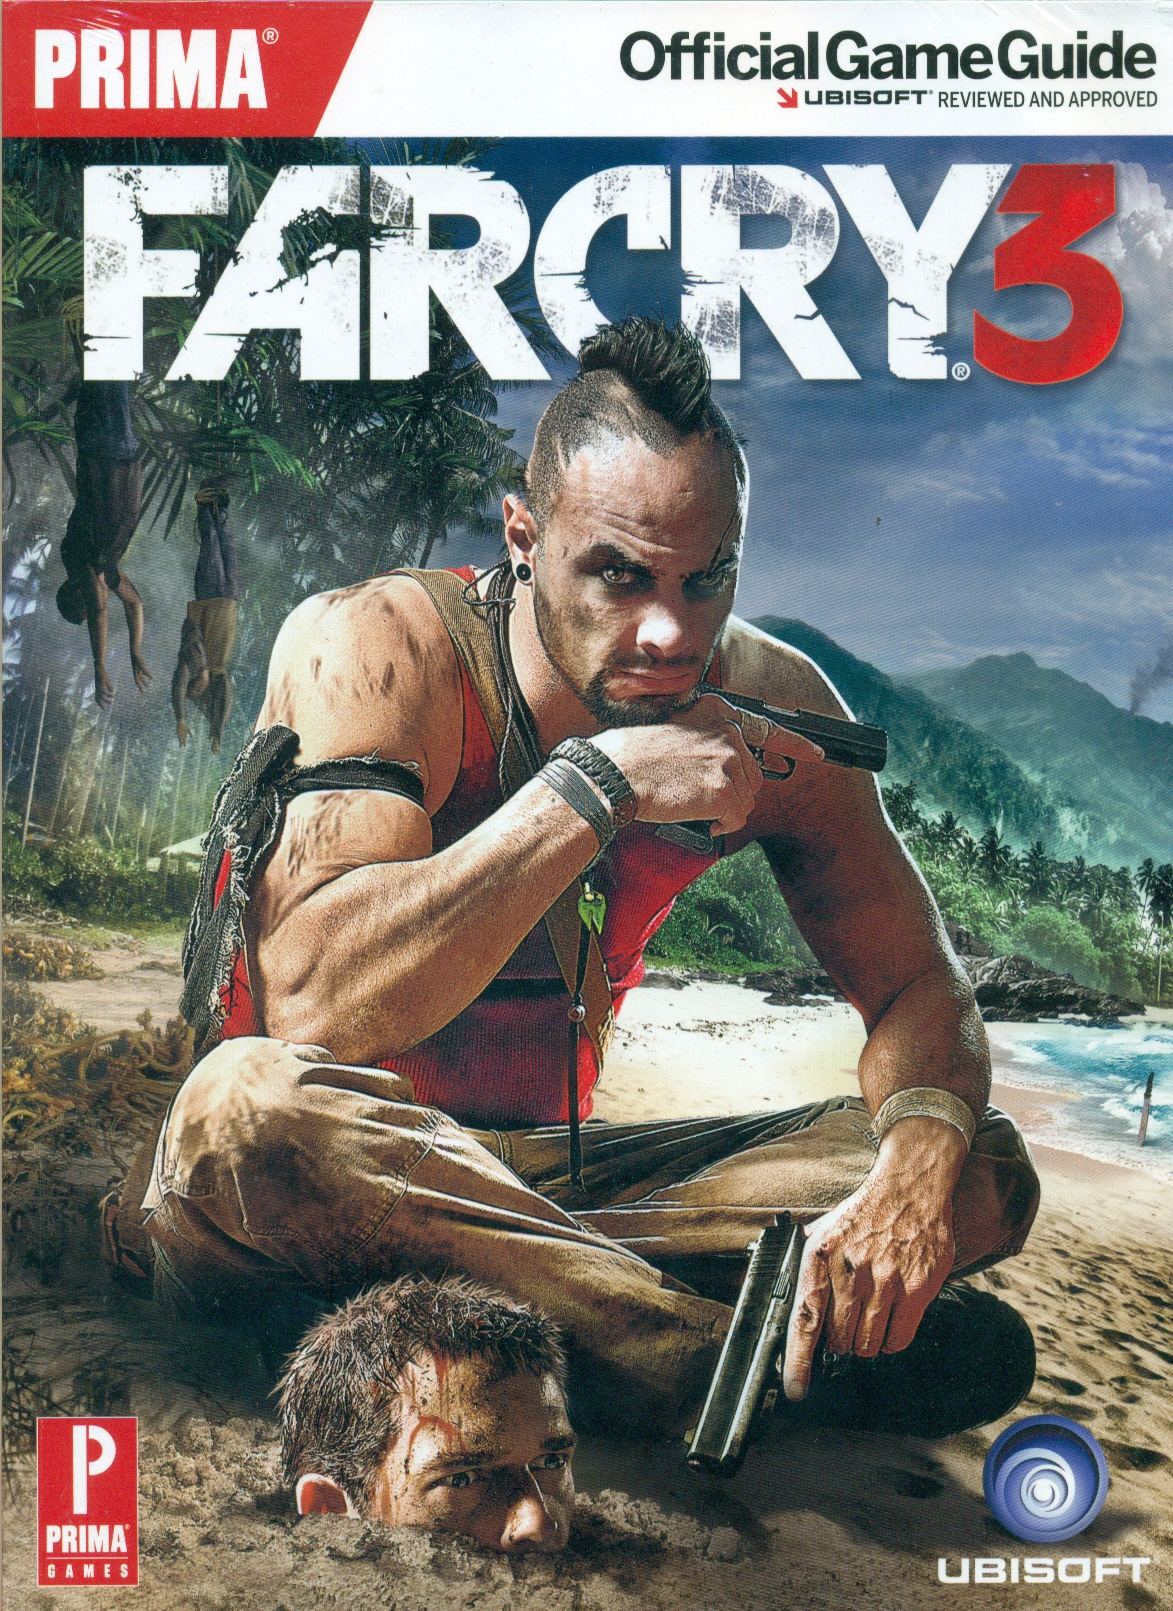 Far Cry 2 Guide